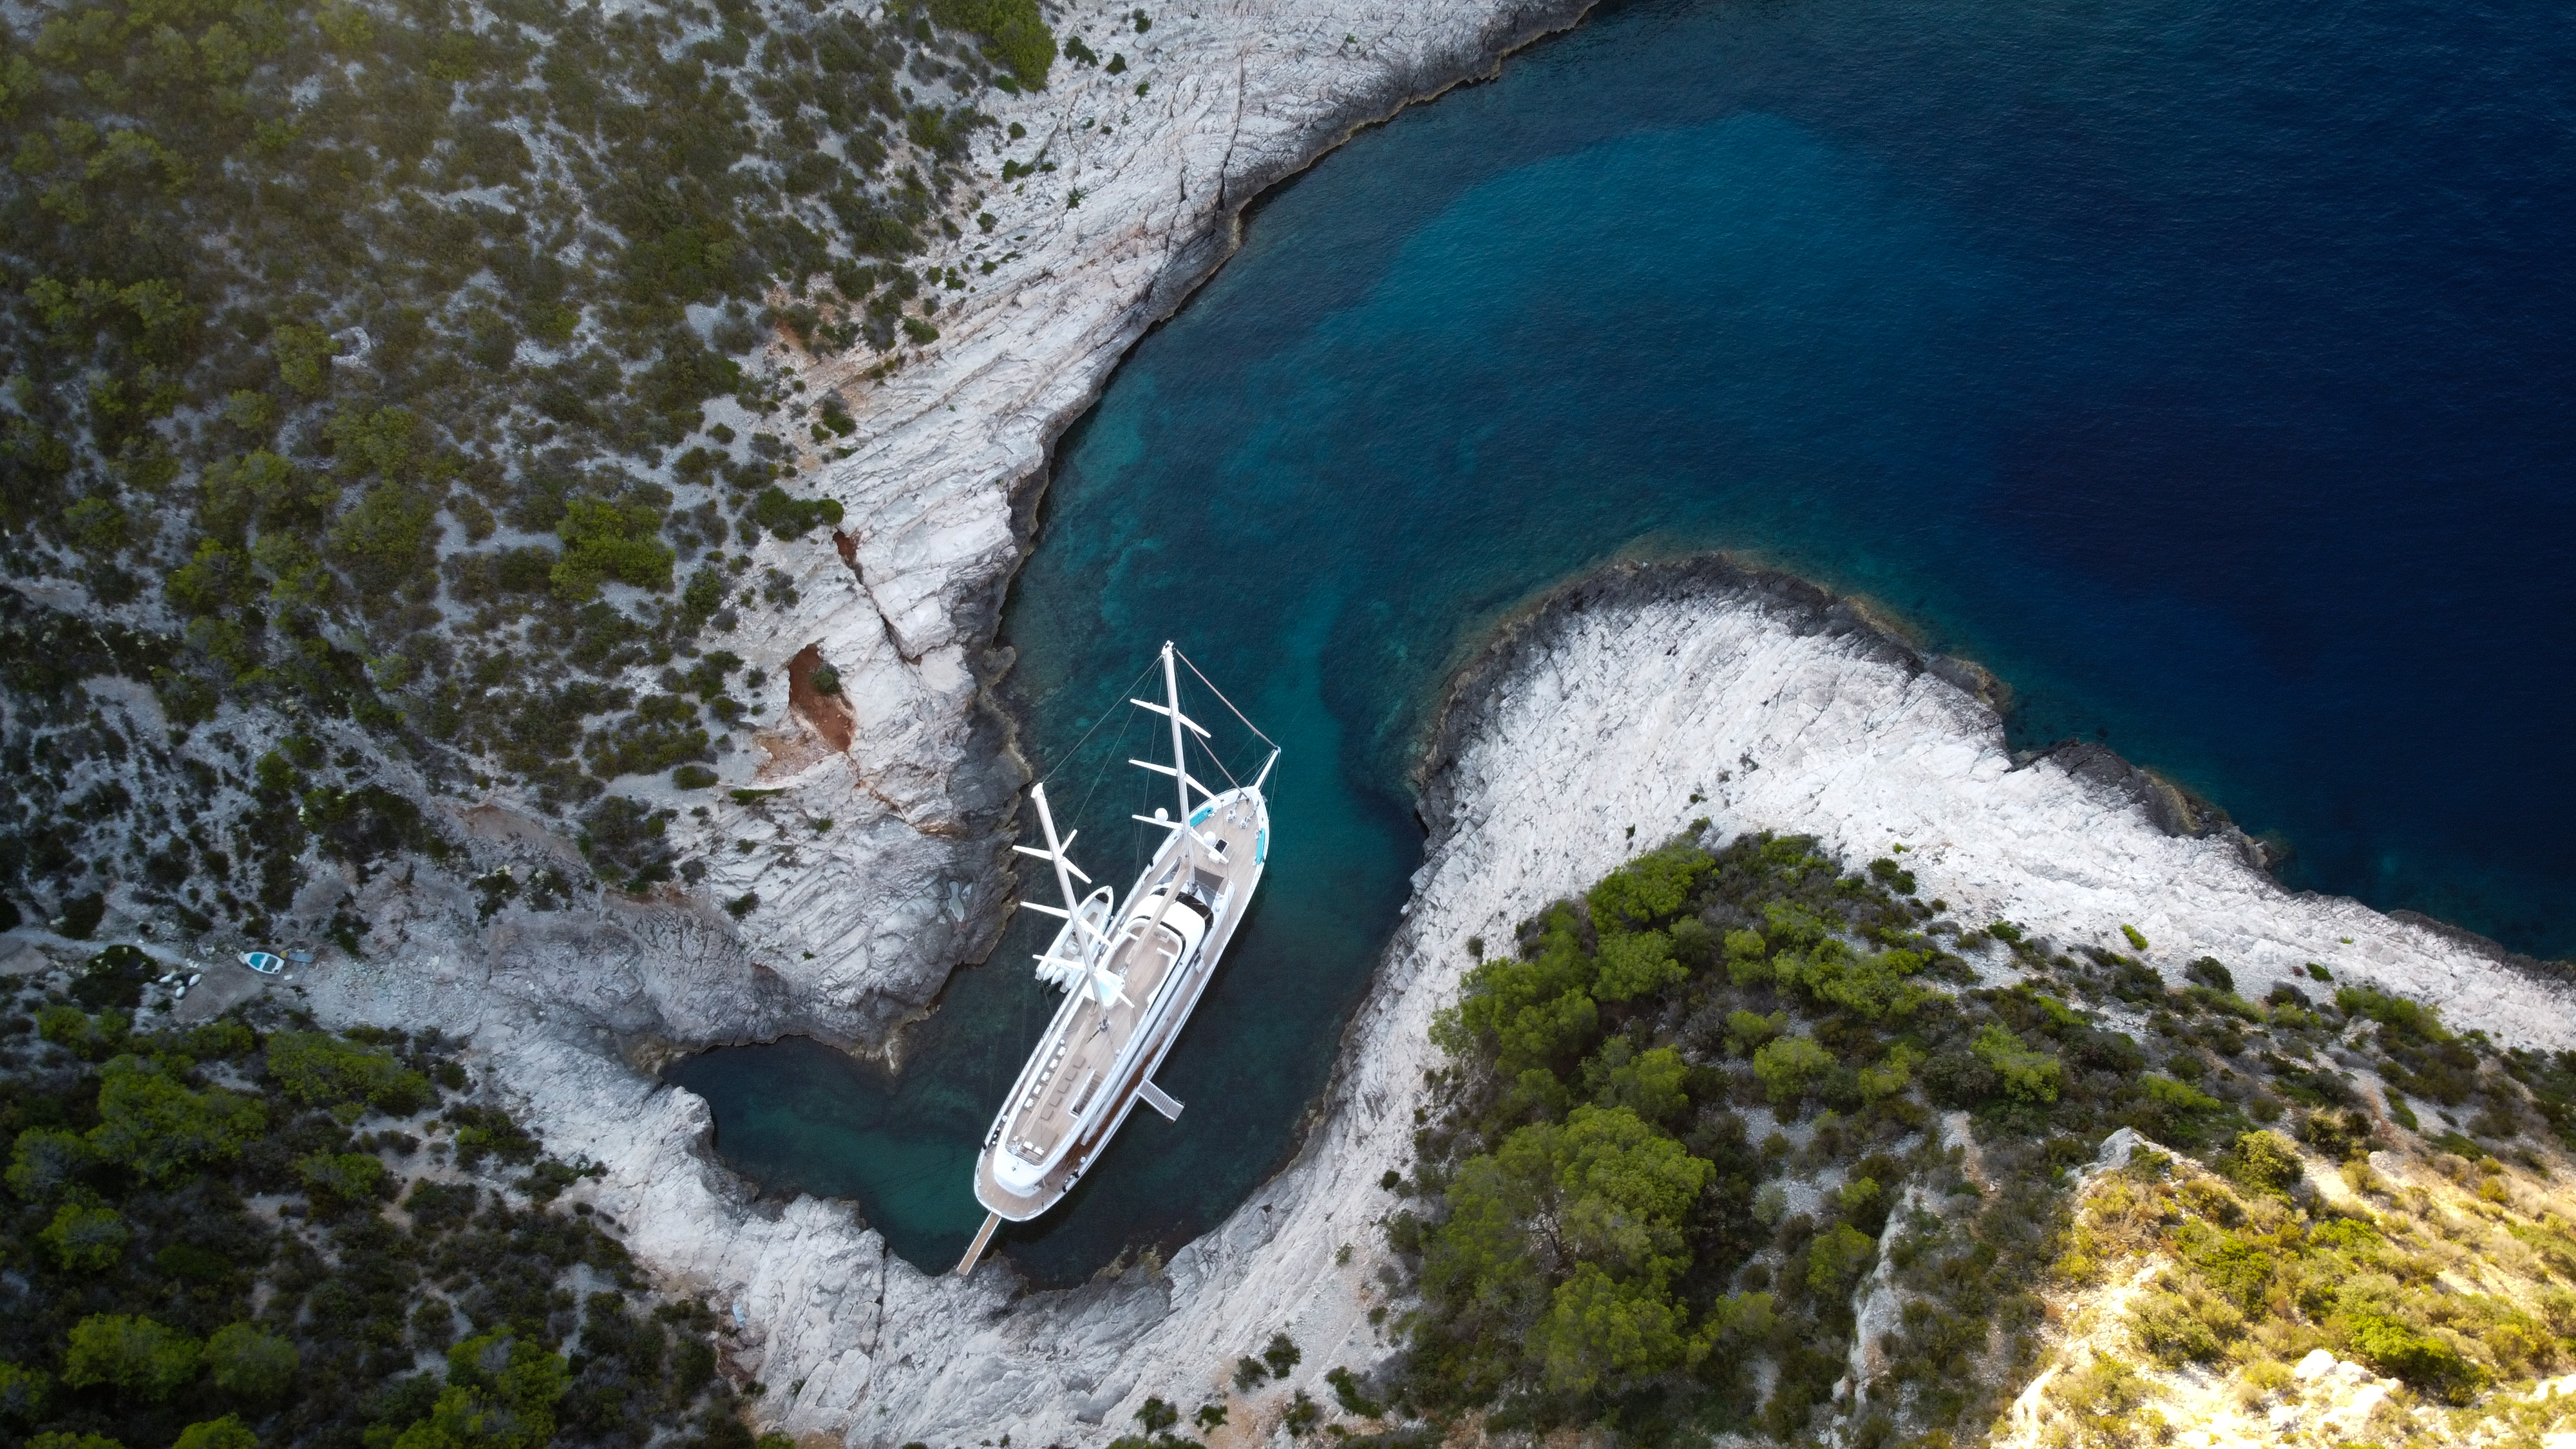 Luxury motor sailer yacht ACAPELLA in a secluded bay in Croatia